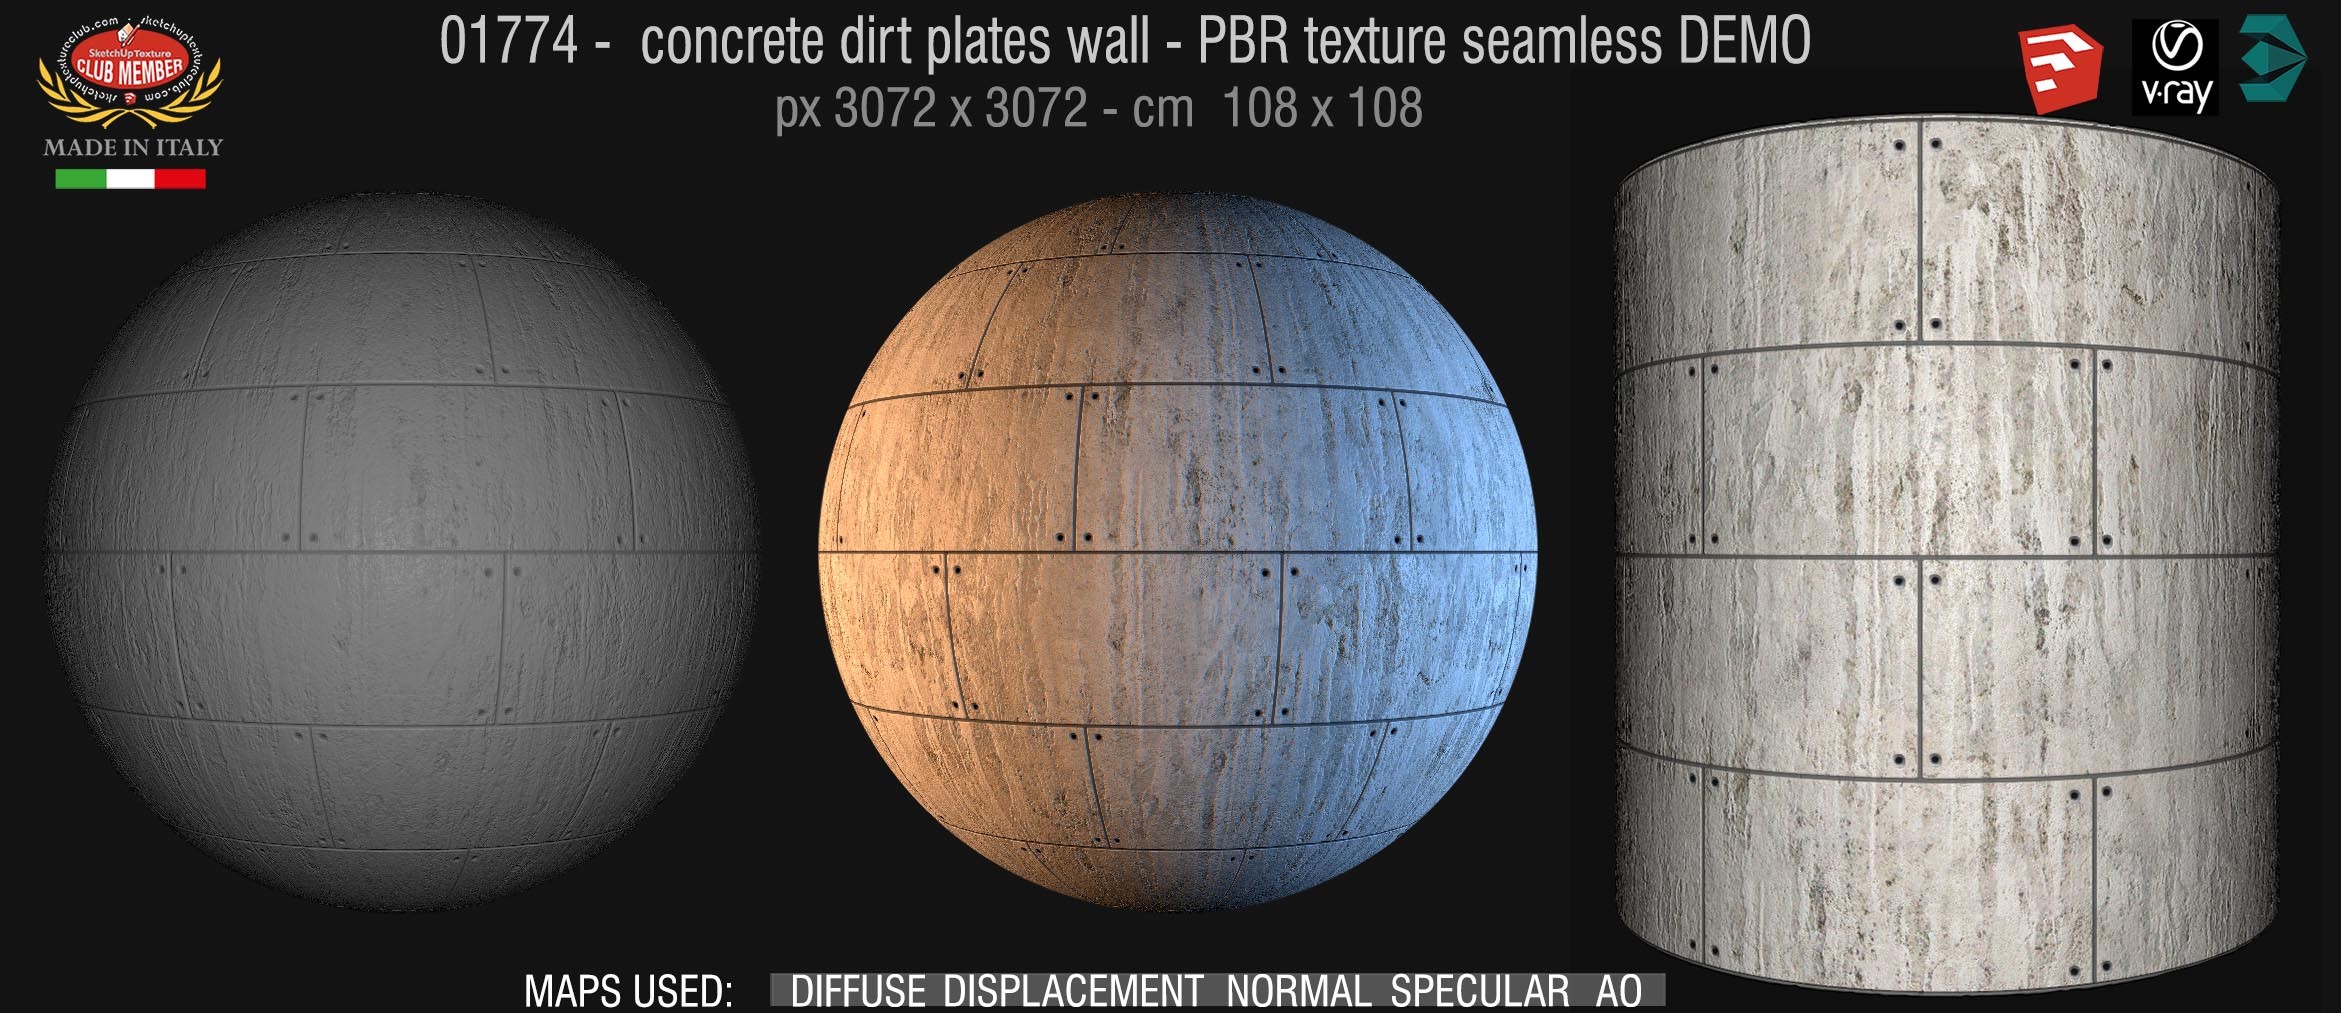 01744 concrete dirt plates wall PBR texture seamless DEMO